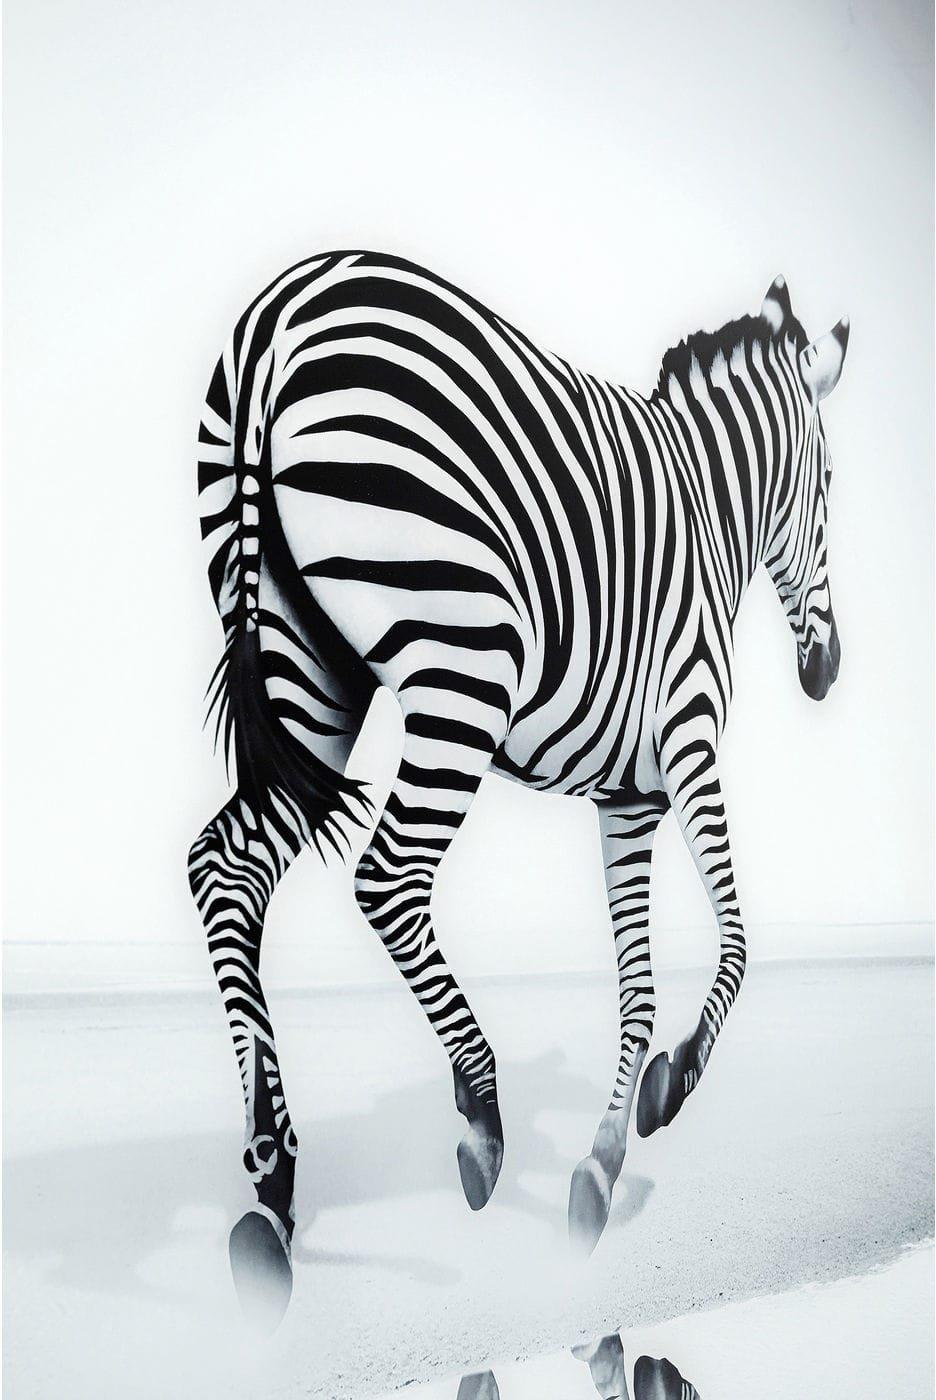 KARE Design Bild Glas Savanne Zebra 120x120cm  